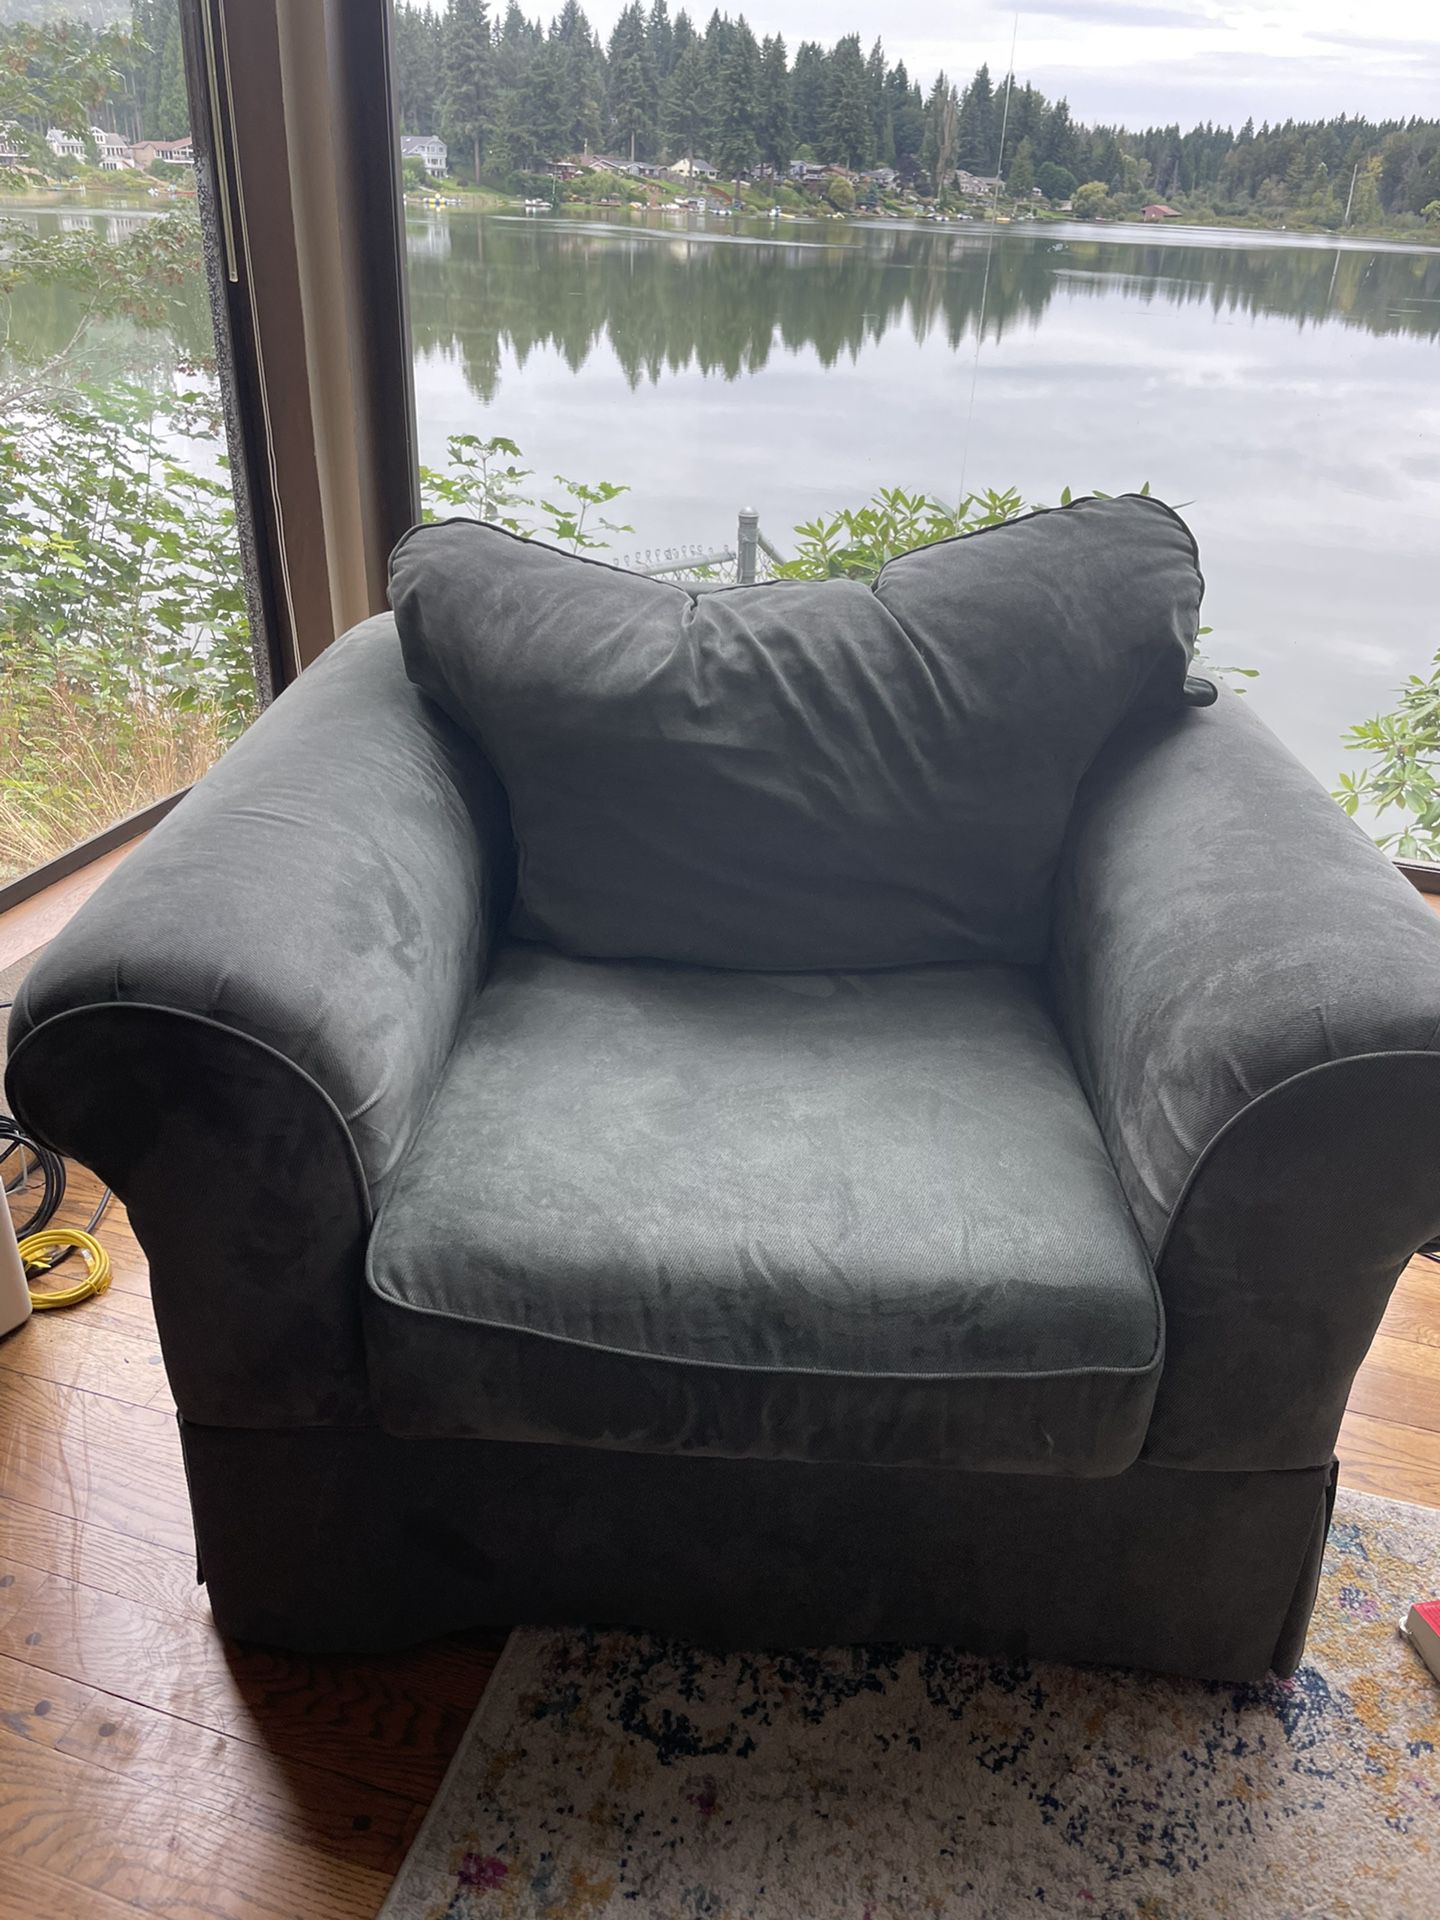 Cozy Green/Grey Armchair w/ Ottoman - Free